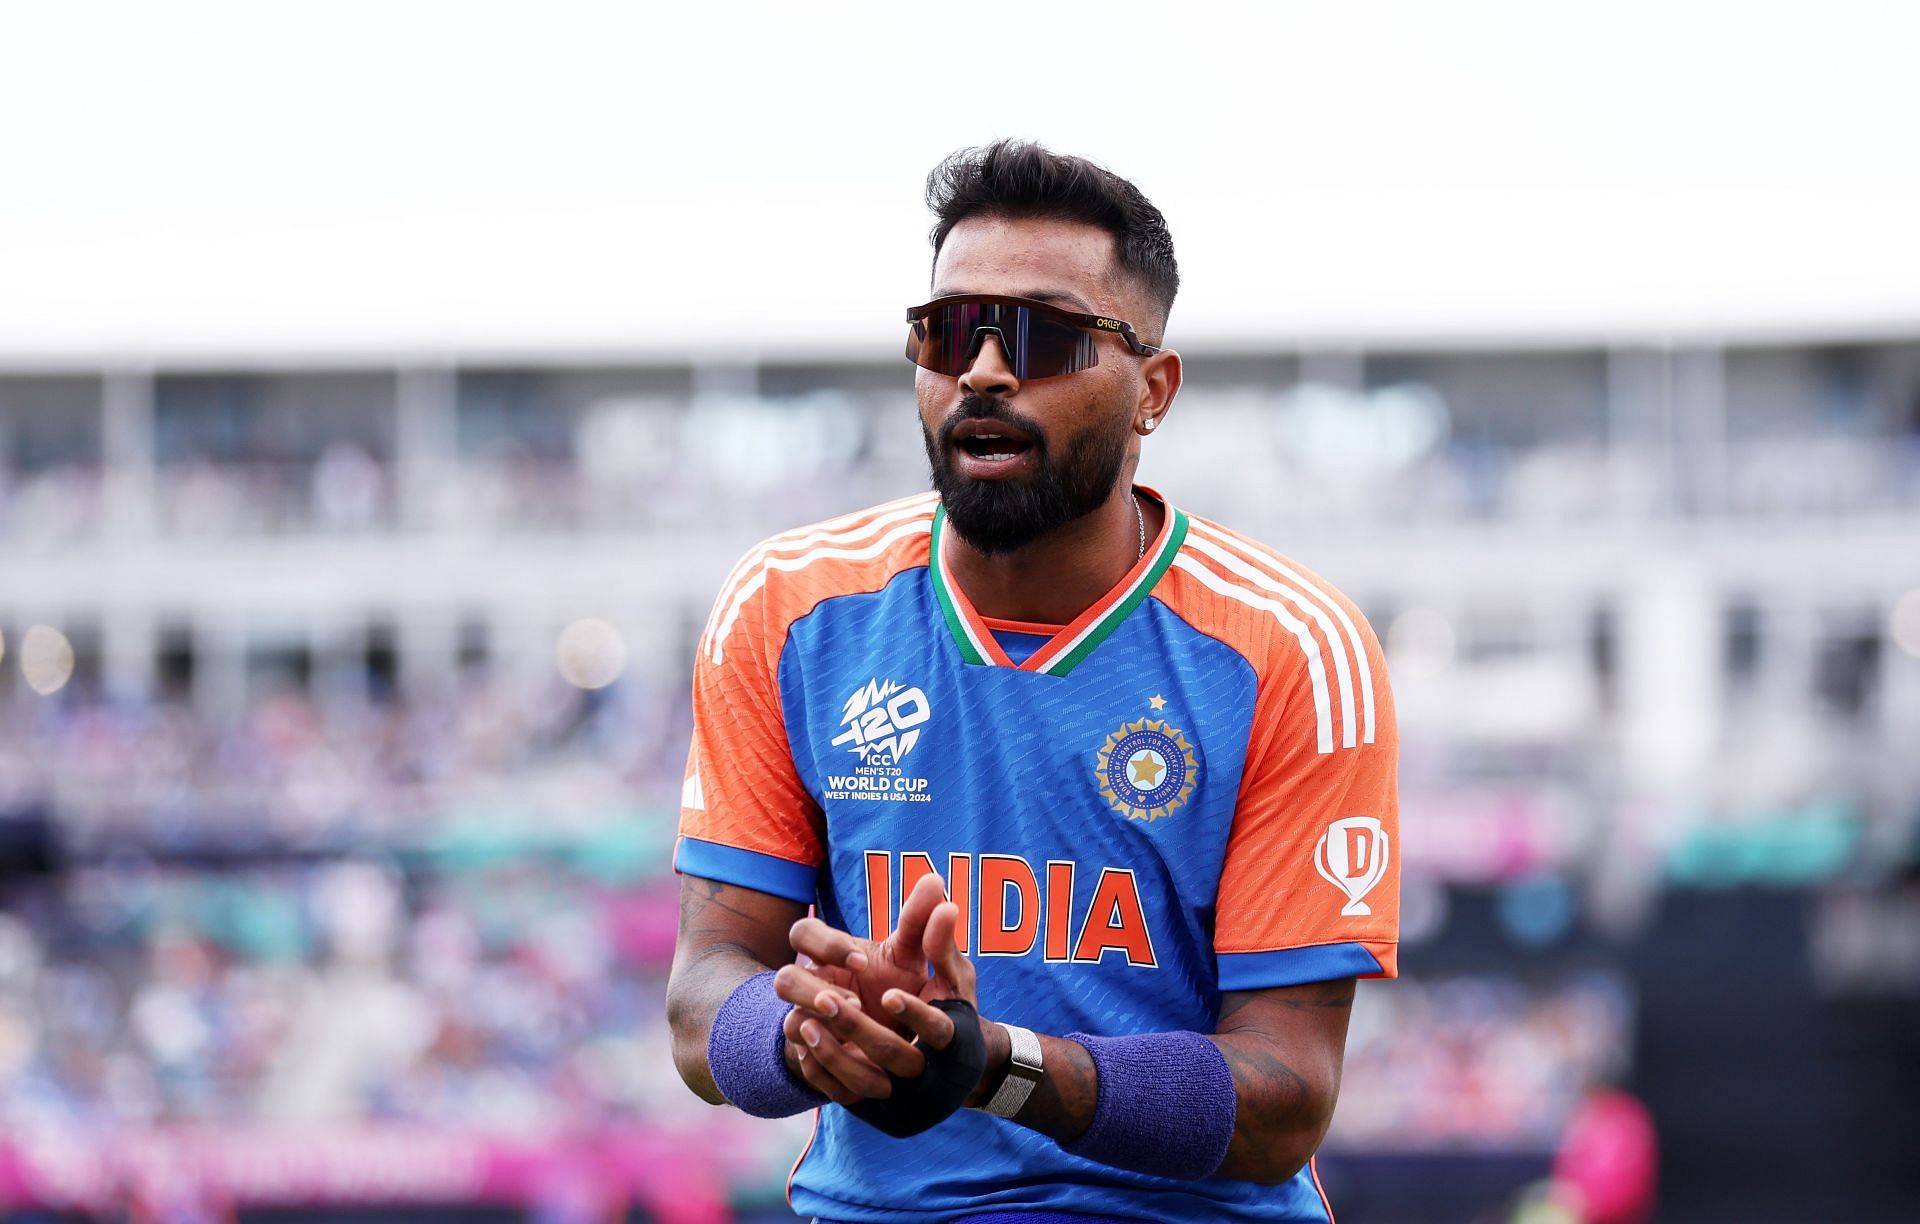 Hardik Pandya to remain unavailable for ODI series against Sri Lanka - Reports